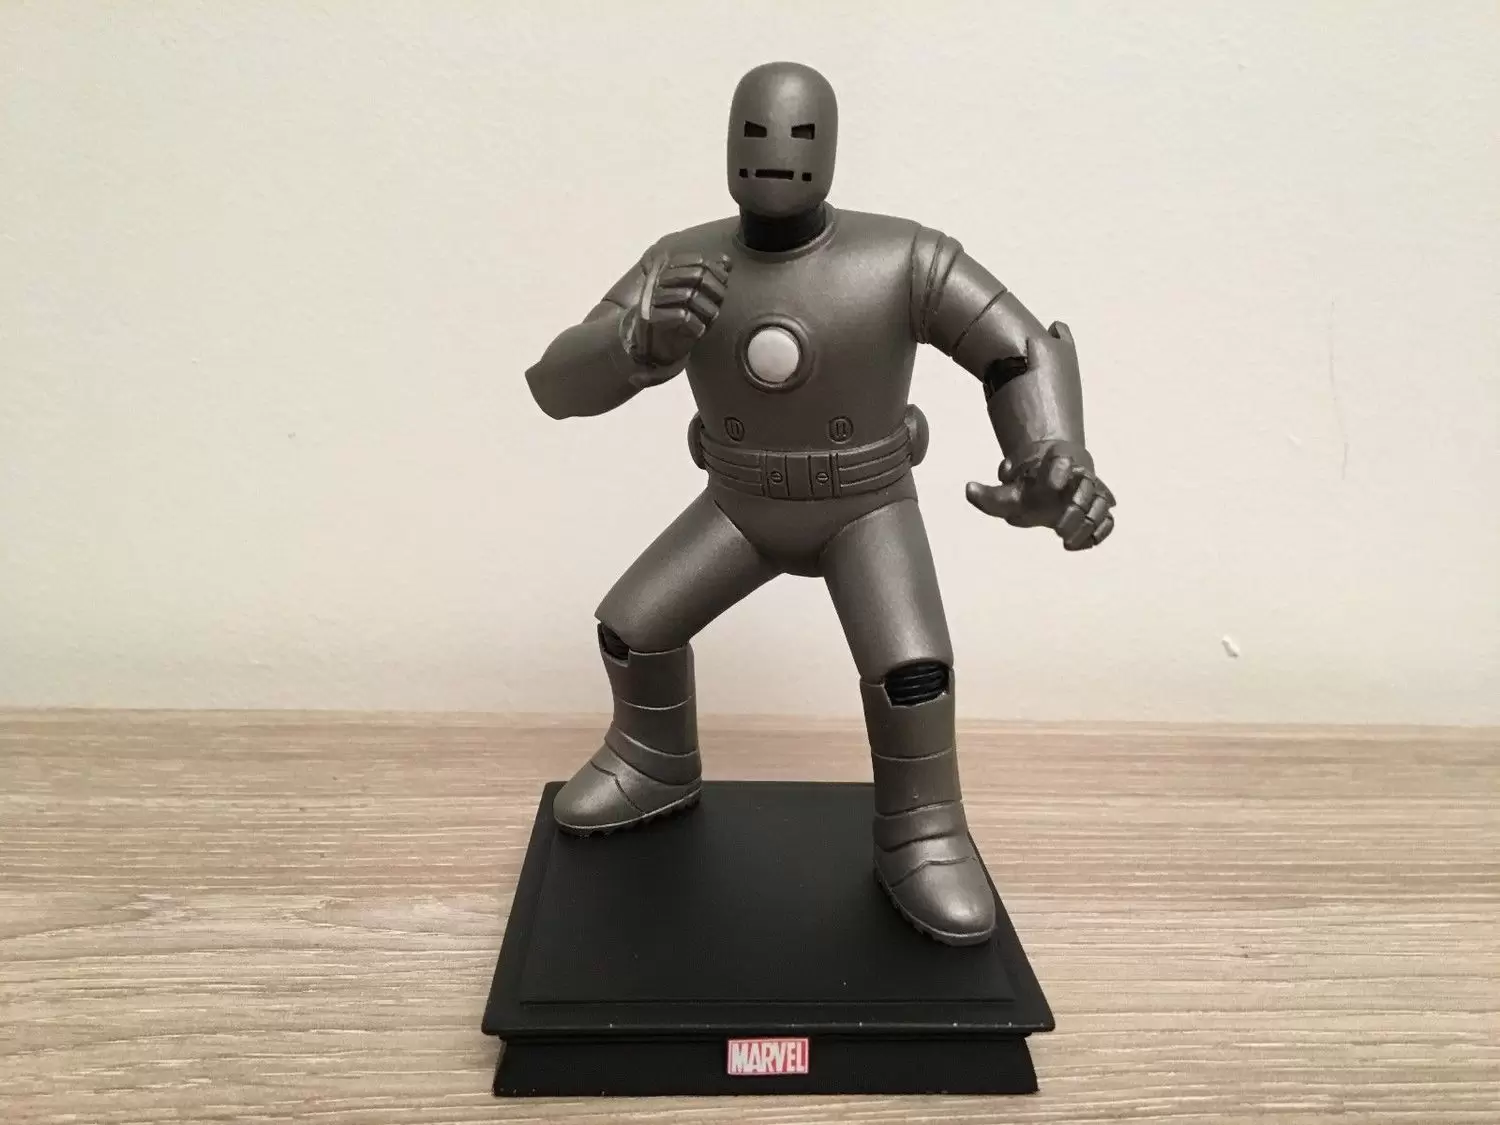 Marvel La Collection des Super-Héros - Iron man Mark 1